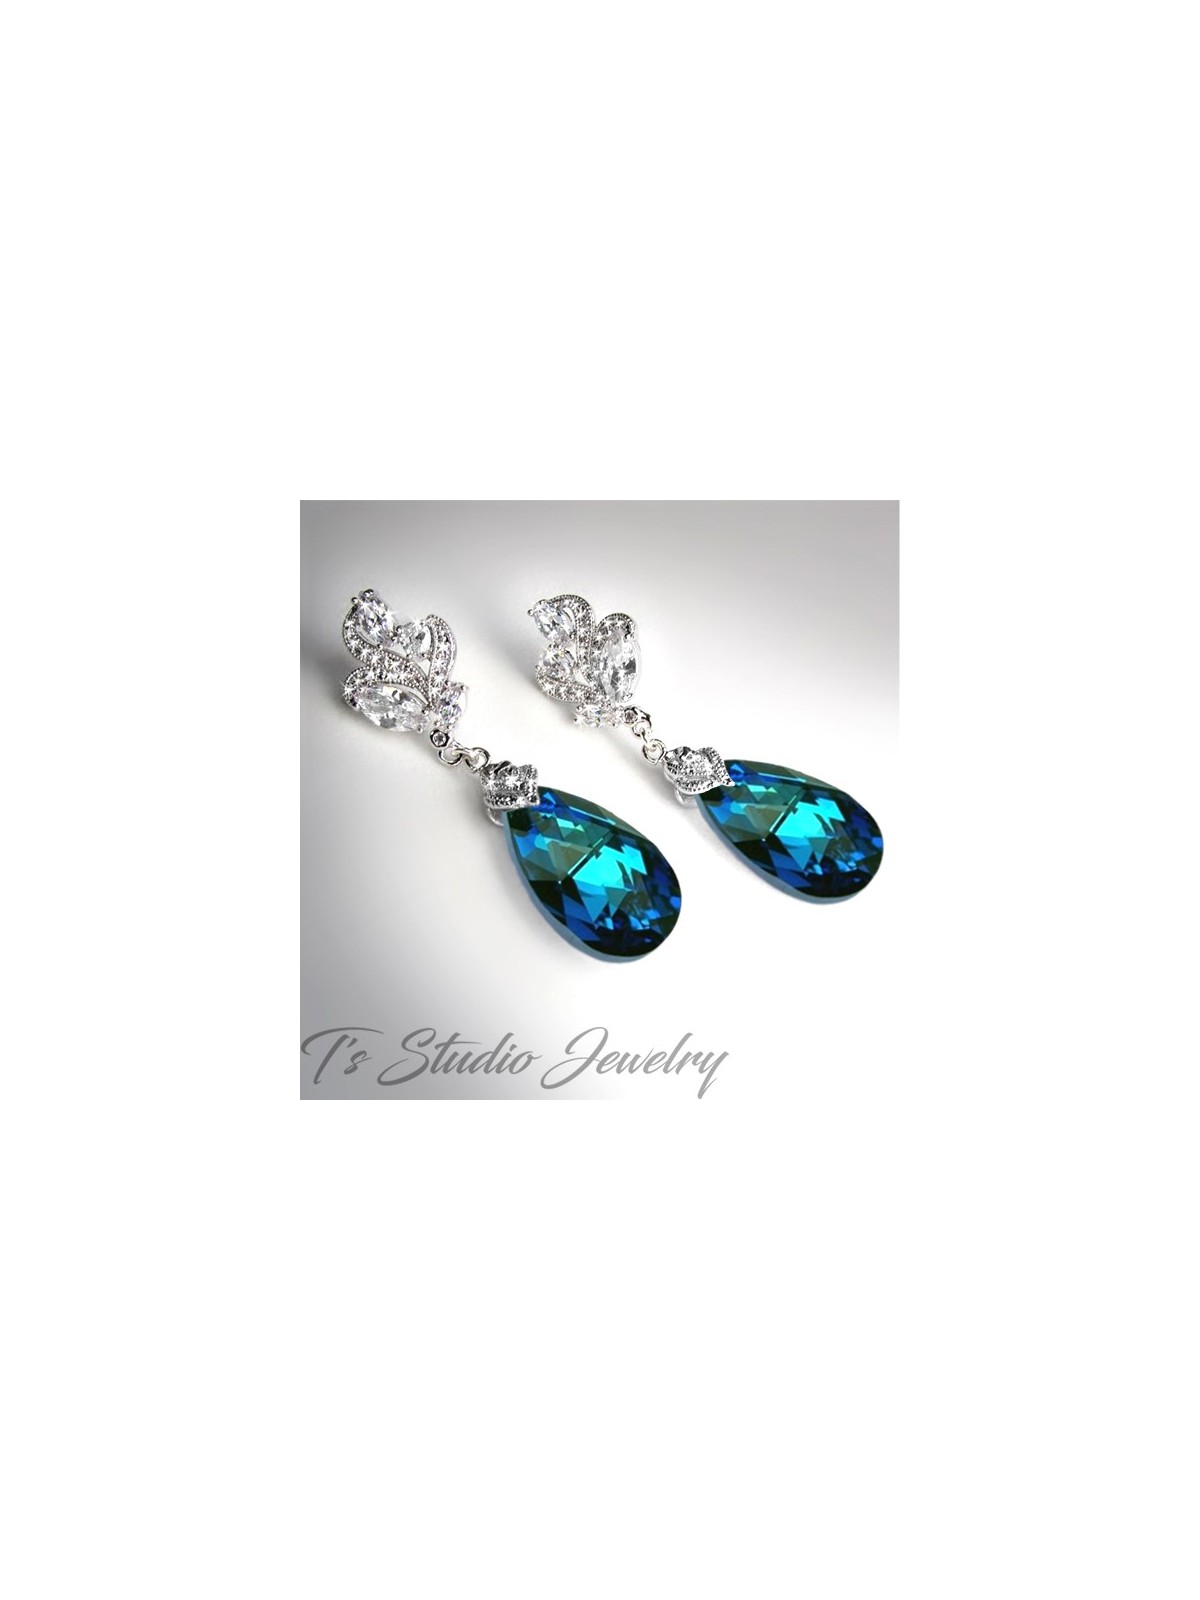 Crystal Peacock Blue Teardrop Earrings